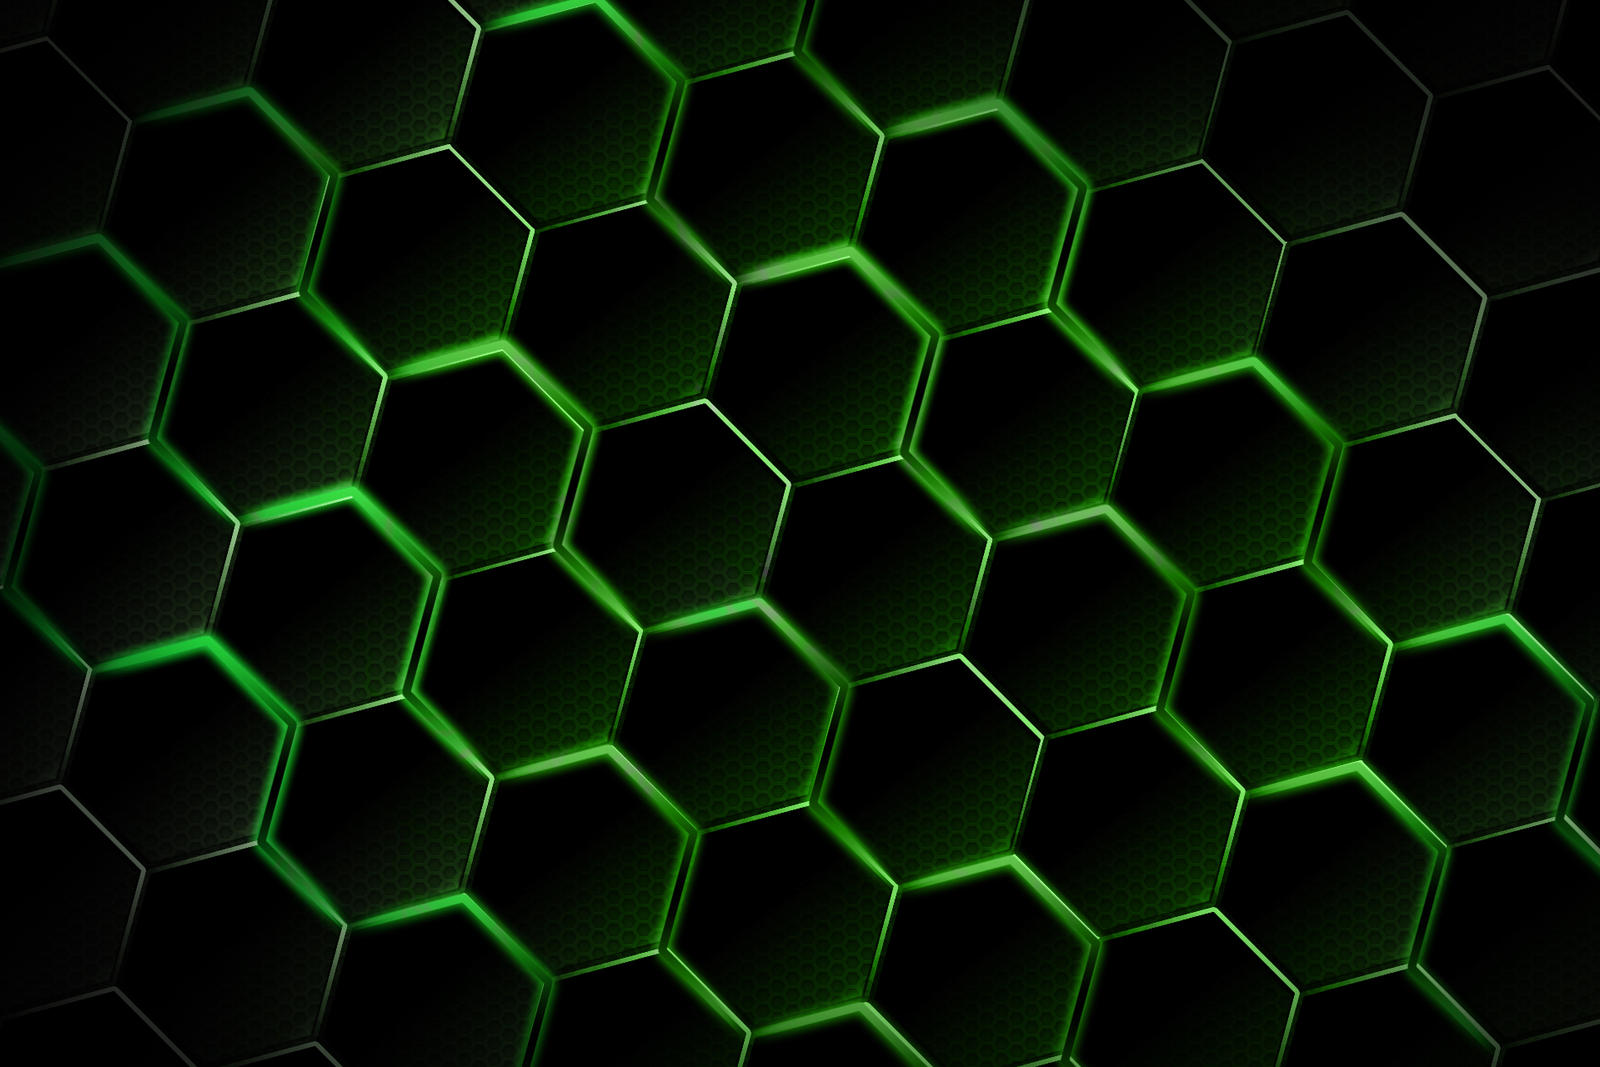 Green Honeycomb Background by AtsaL78 on DeviantArt